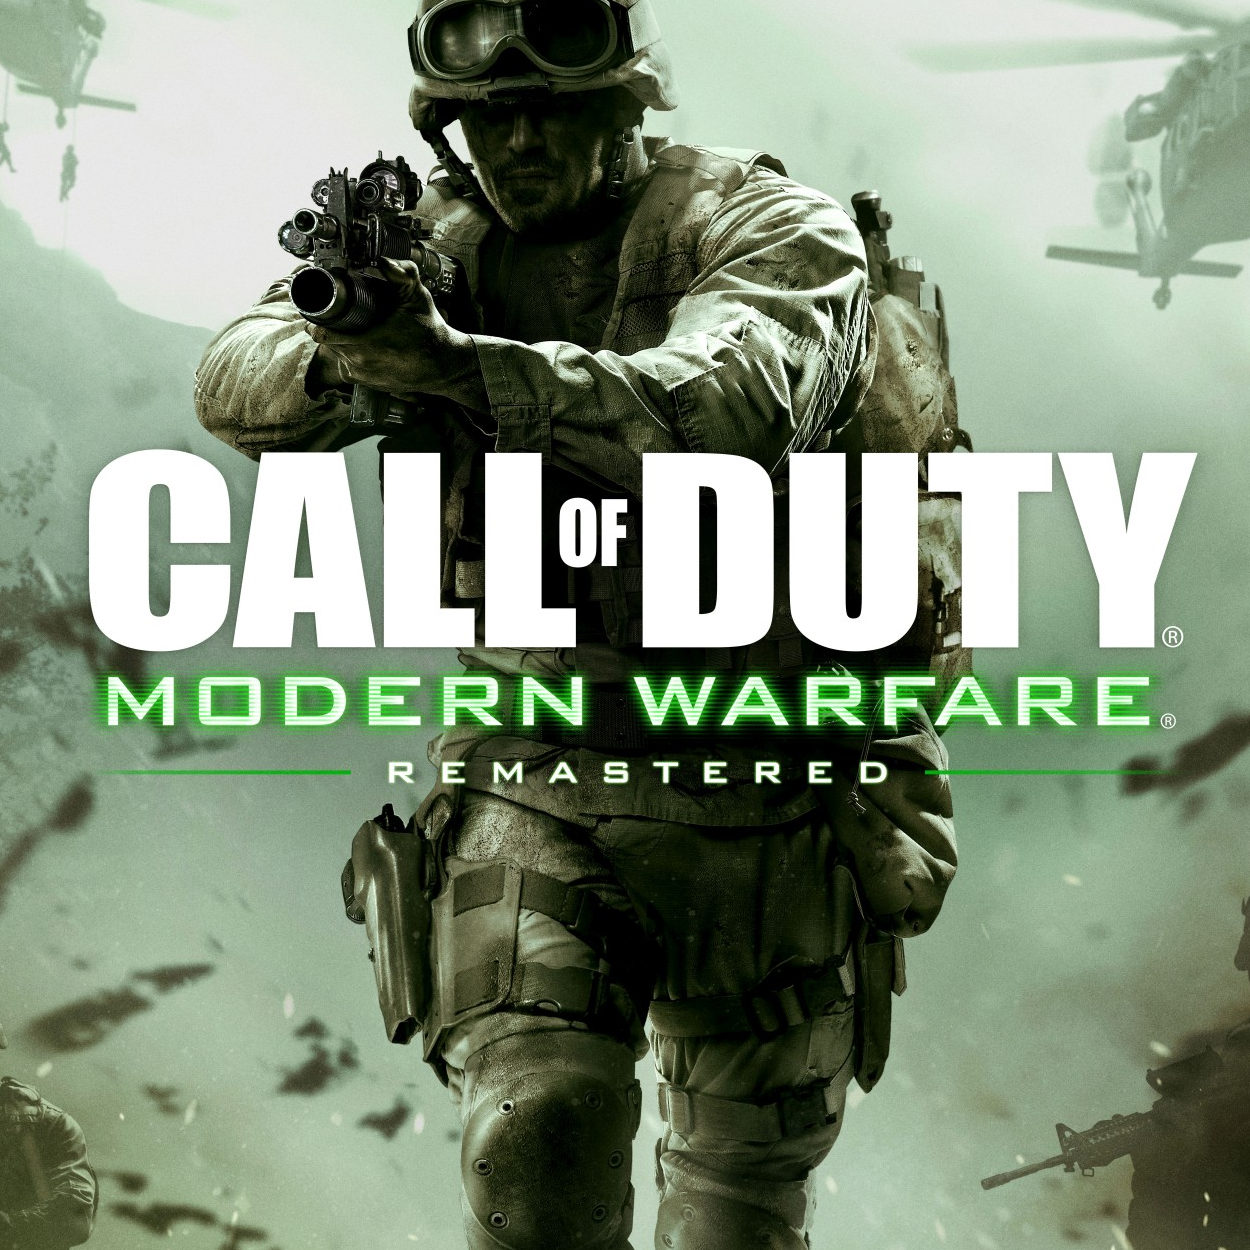 Call of duty 1 4. Call of Duty 4 Modern Warfare Remastered. Call of Duty Modern Warfare 3 Remastered. Call of Duty Модерн варфаер 4. Call of Duty MW 4 Remastered.